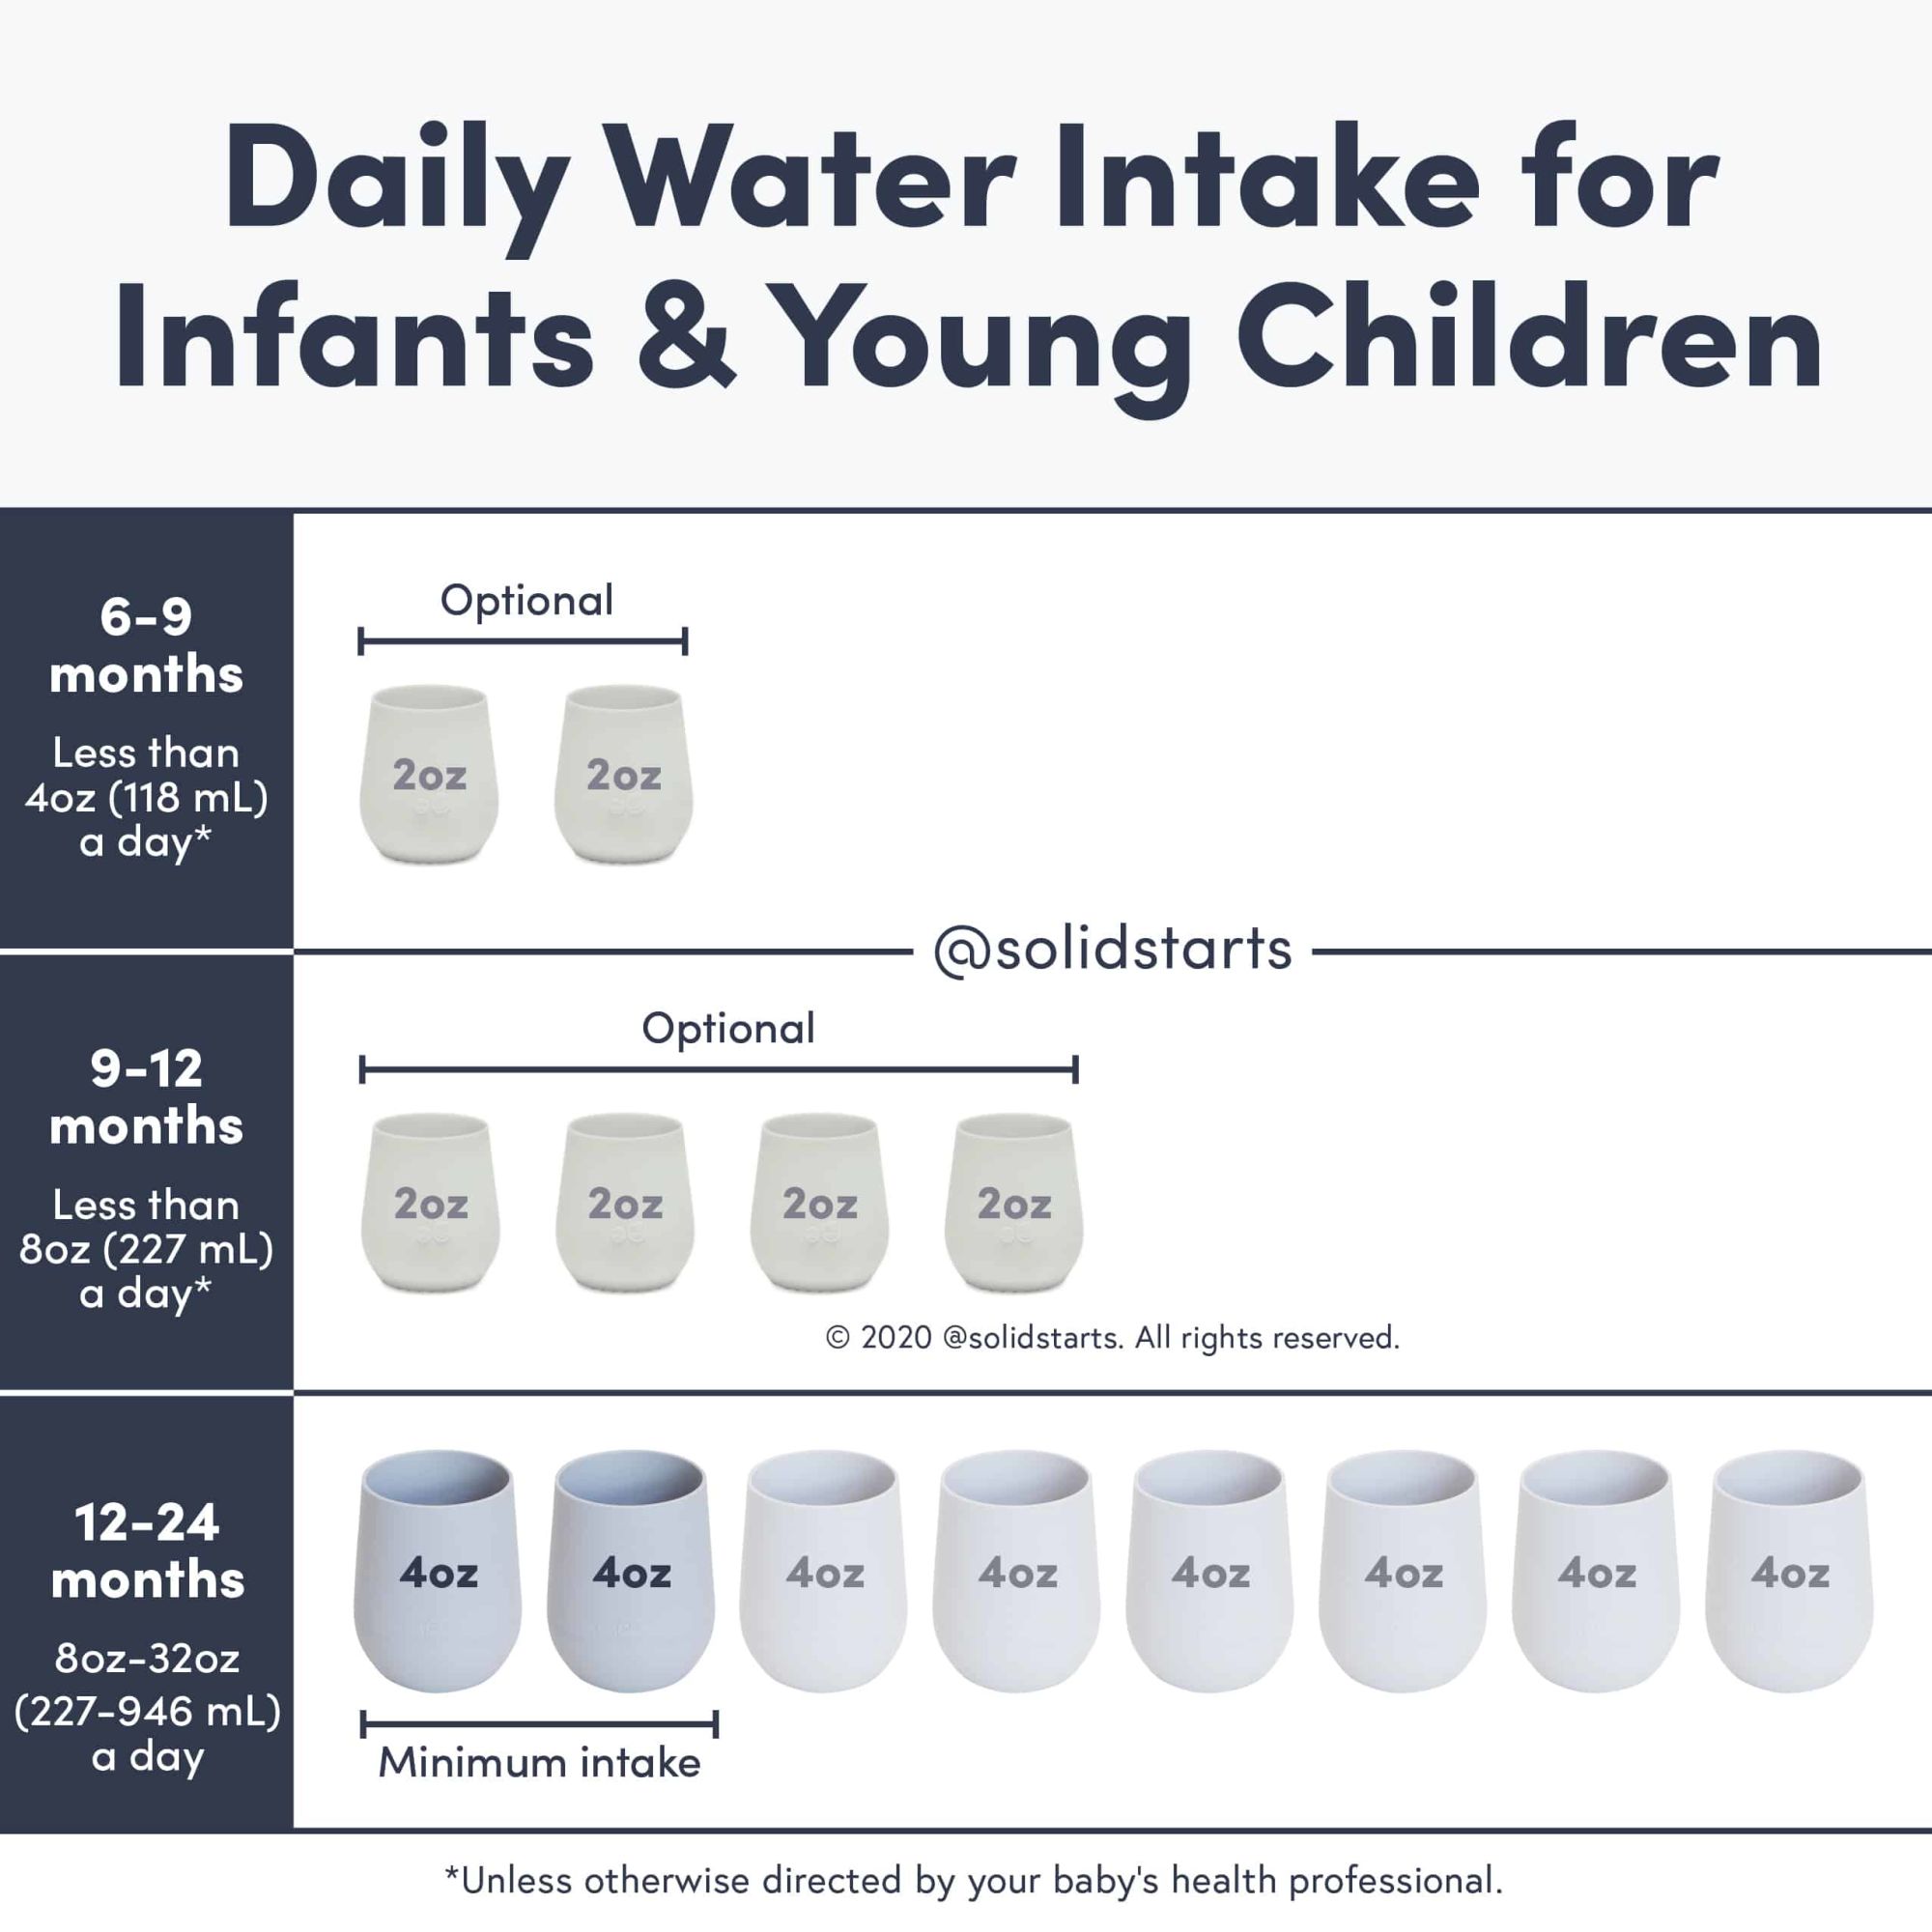 https://images.ctfassets.net/ruek9xr8ihvu/4k36MsmmorvnnuqObwazsw/284a0b7629584fde434914c4e6375d9e/Daily-Water-Intake-for-Infants-and-Young-Children-1.jpg?w=2000&q=80